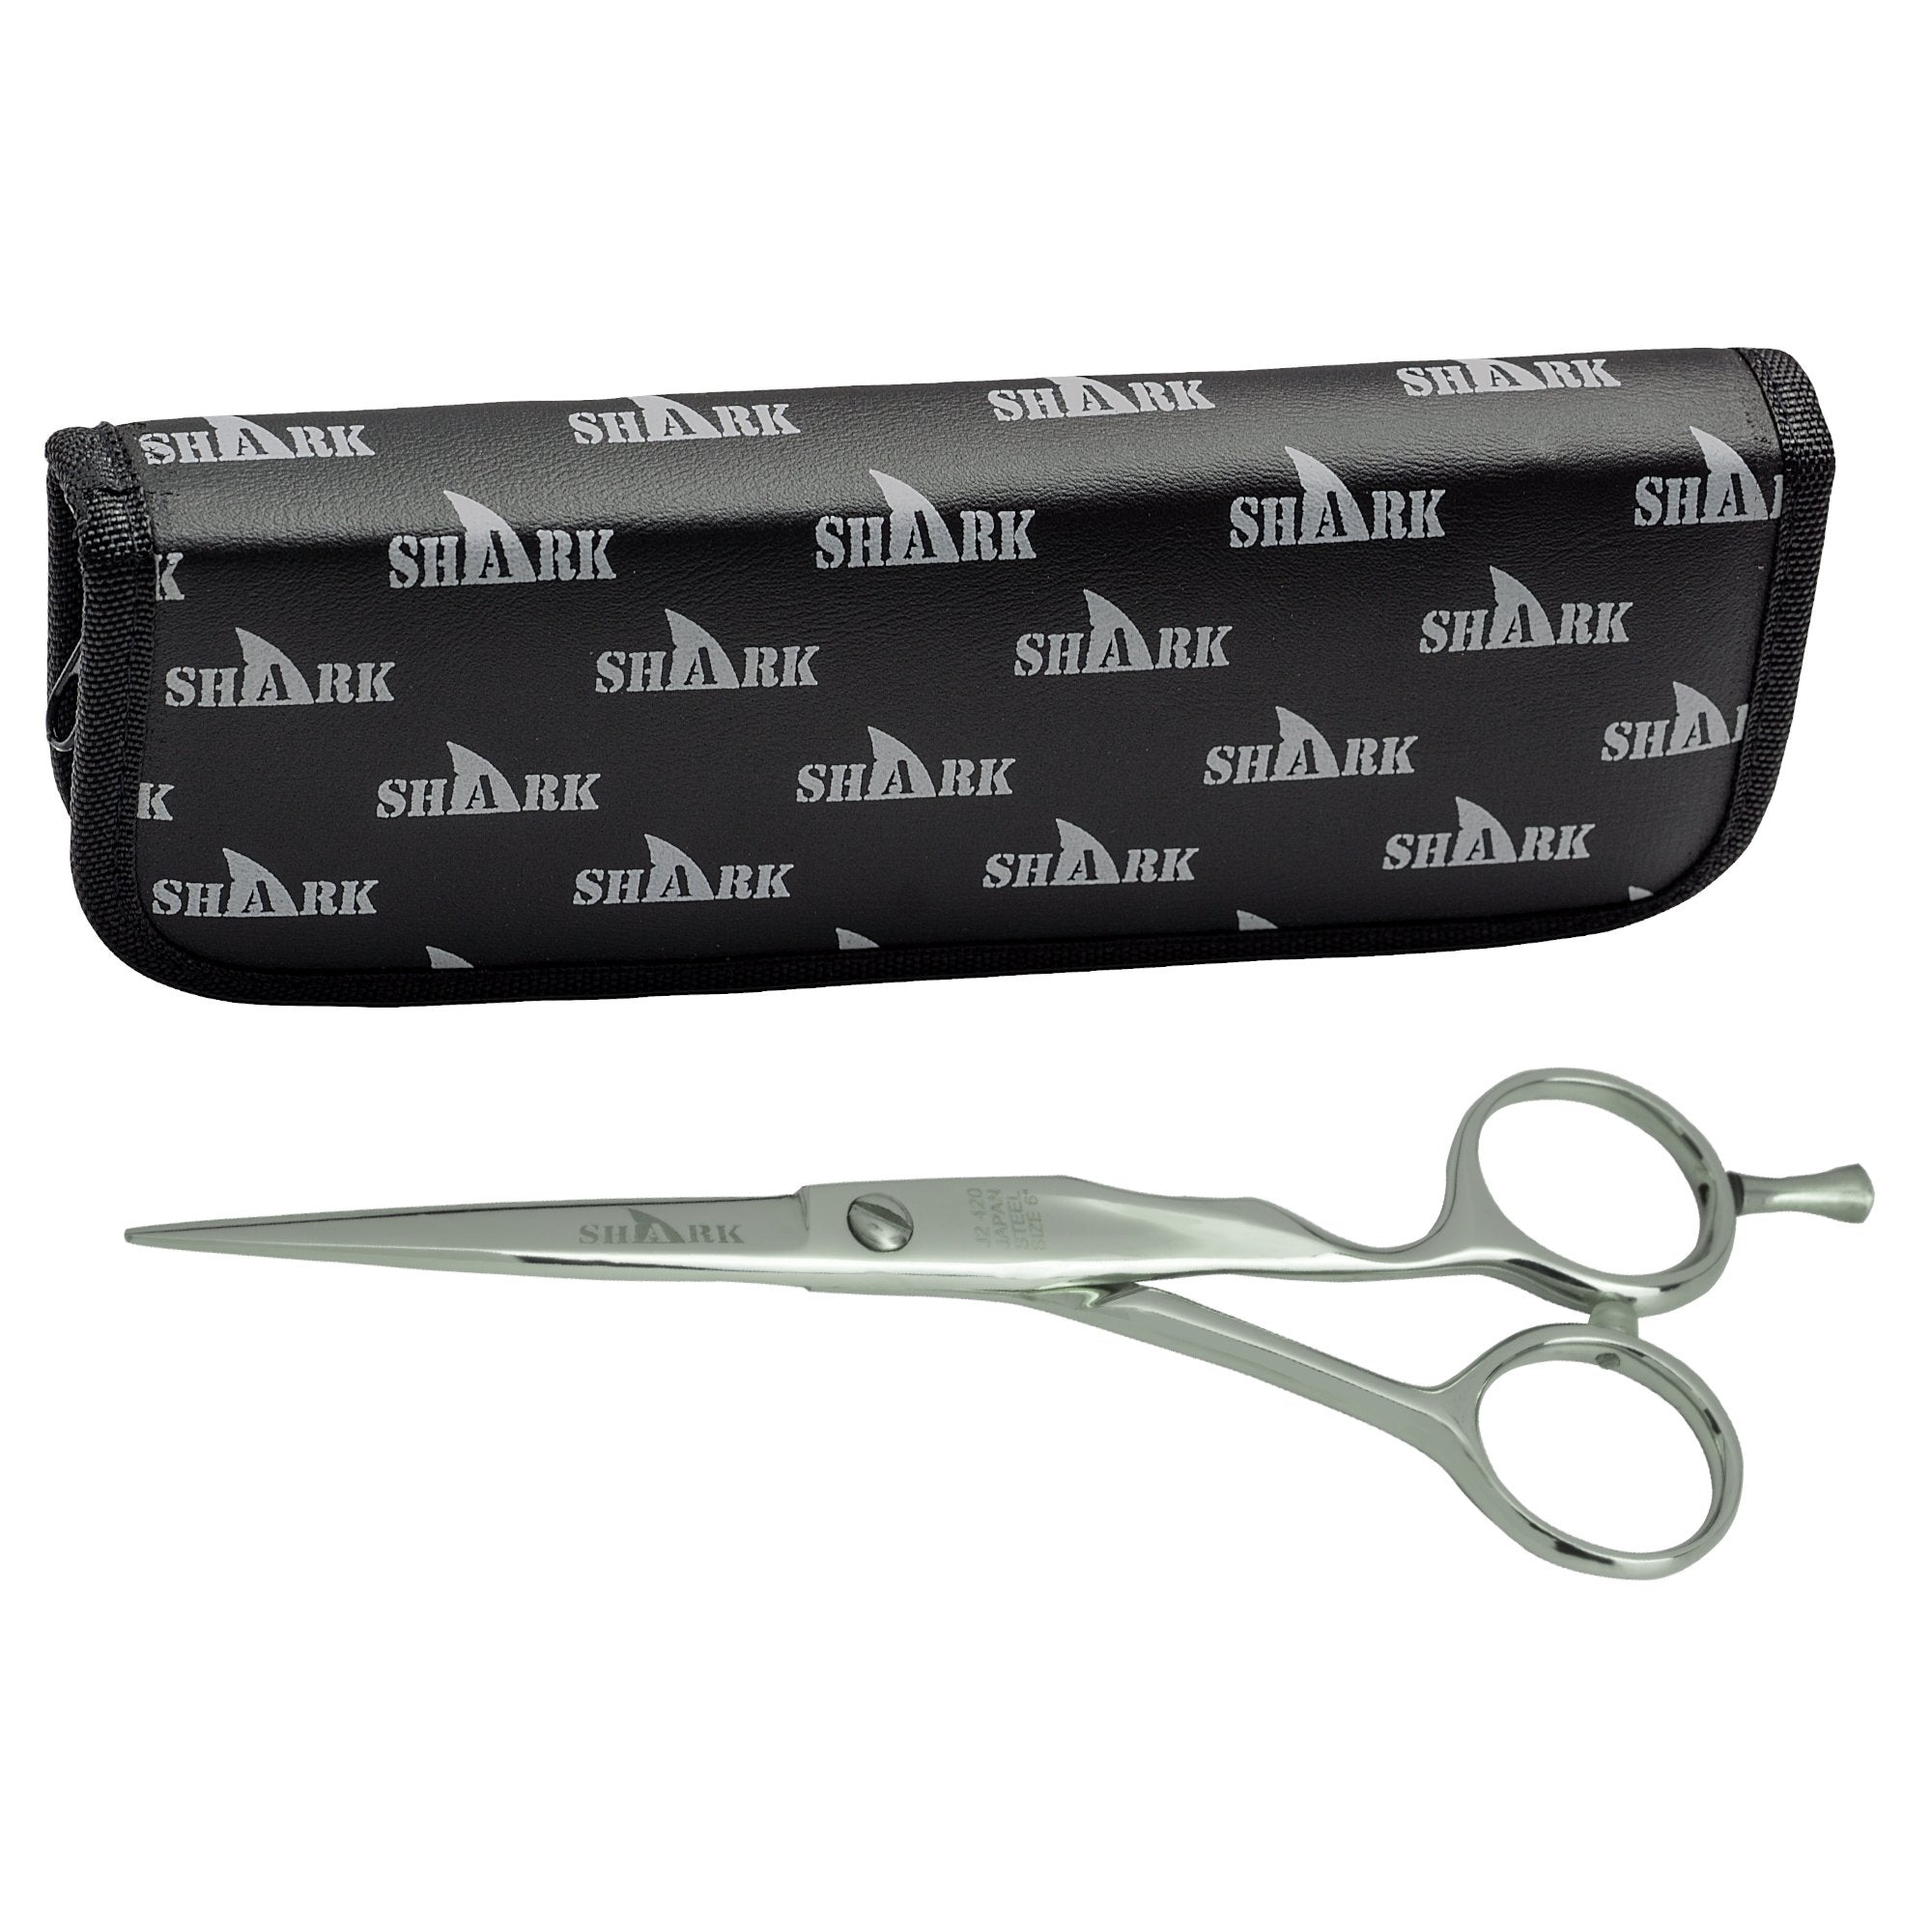 Shark Curve Barber scissors